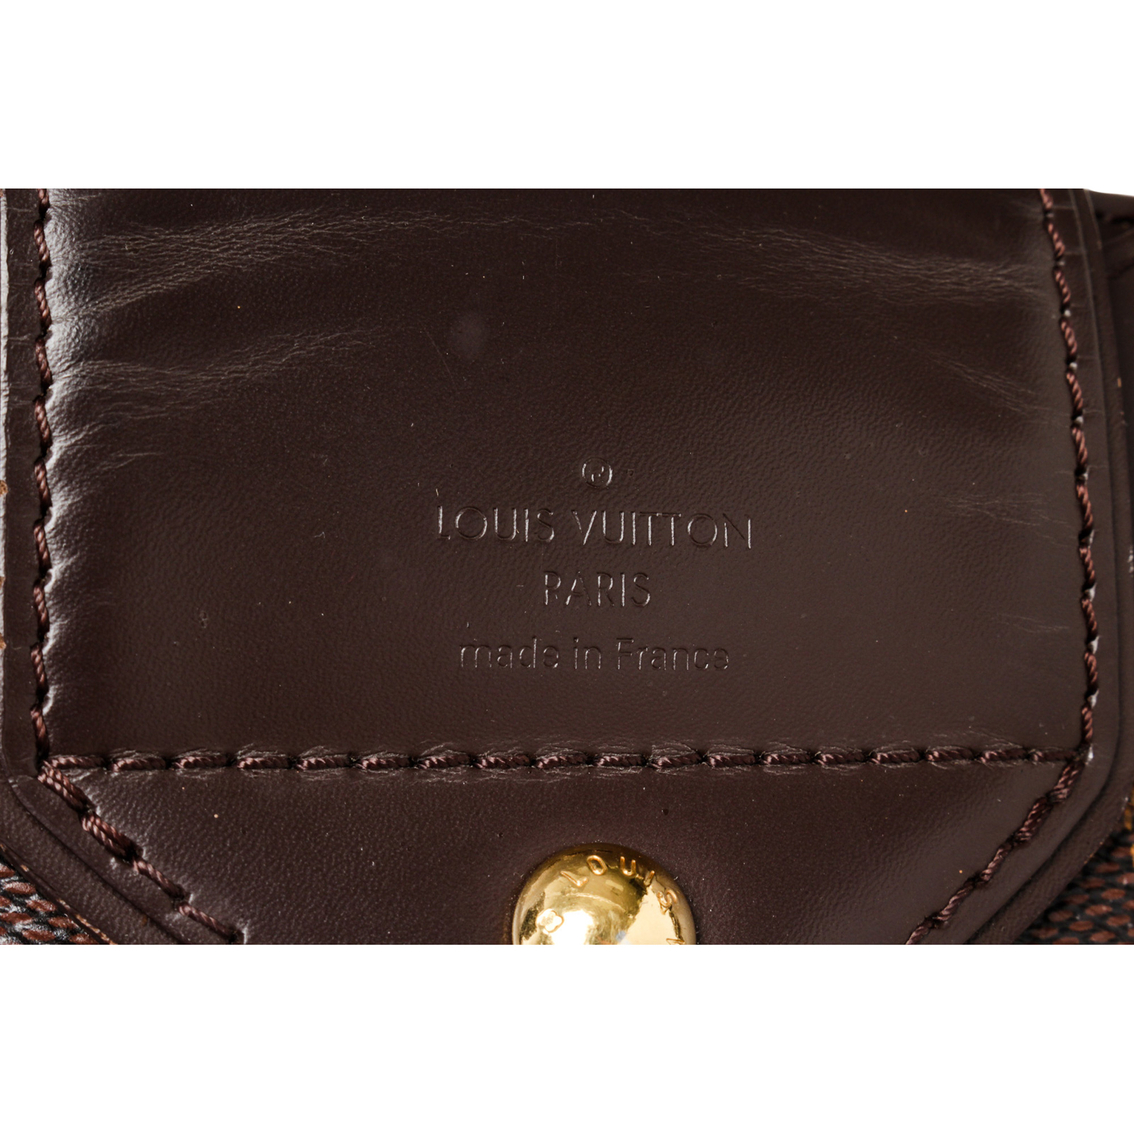 Pre-Owned Louis Vuitton Sistina PM Damier Ebene Shoulder Bag